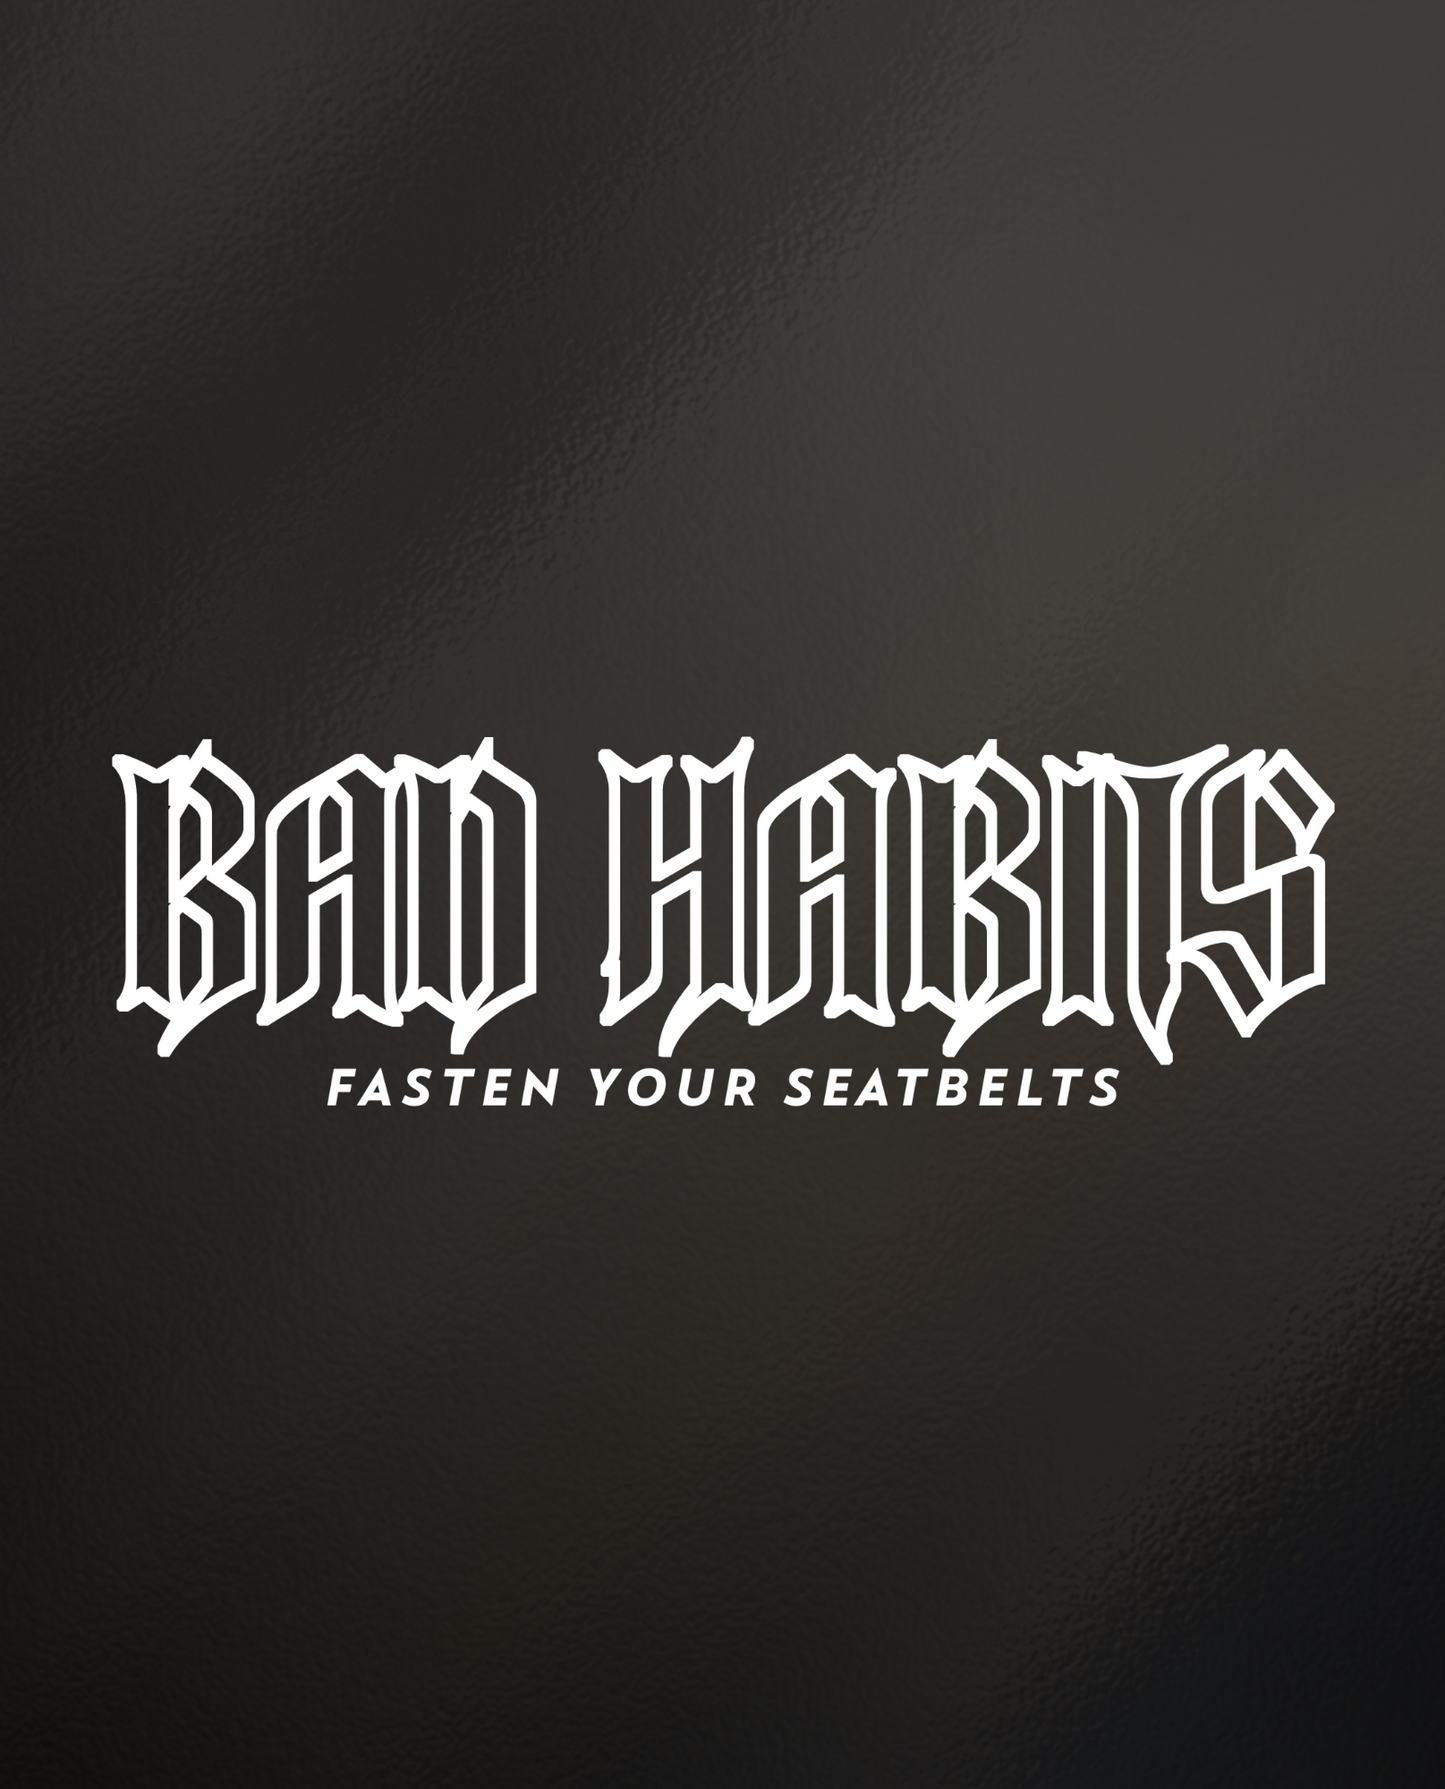 Bad Habits! Fasten Your Seatbelts - Bottom Windshield Vinyl Sticker